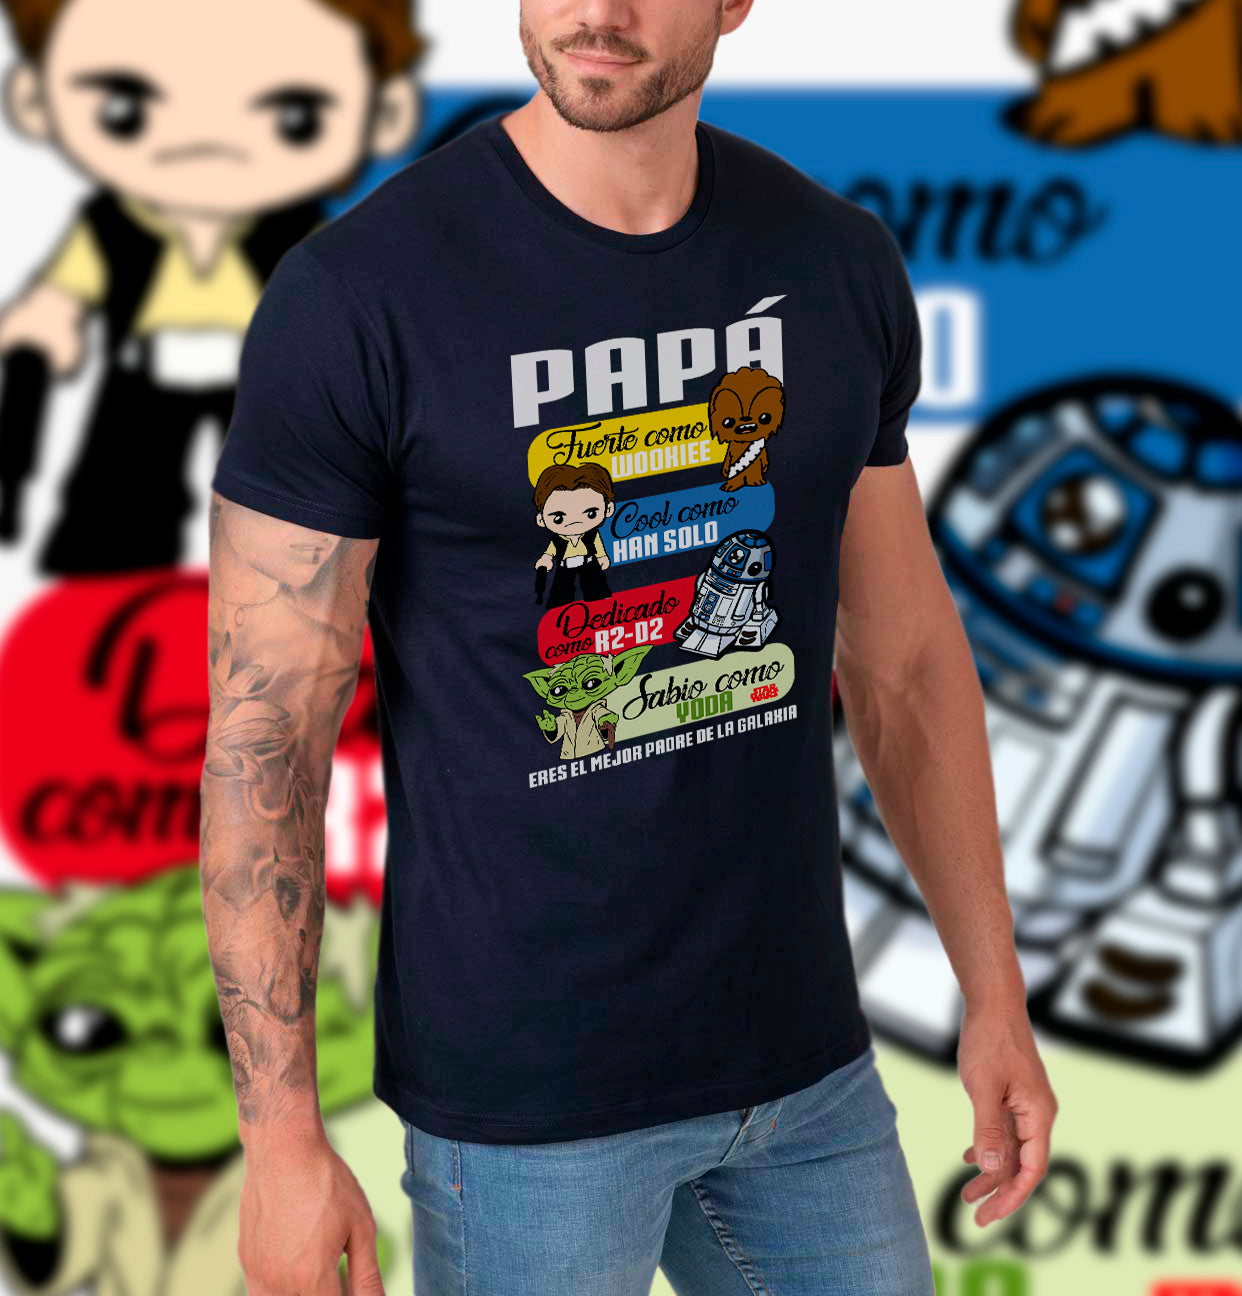 Camiseta Superhéroes Papá